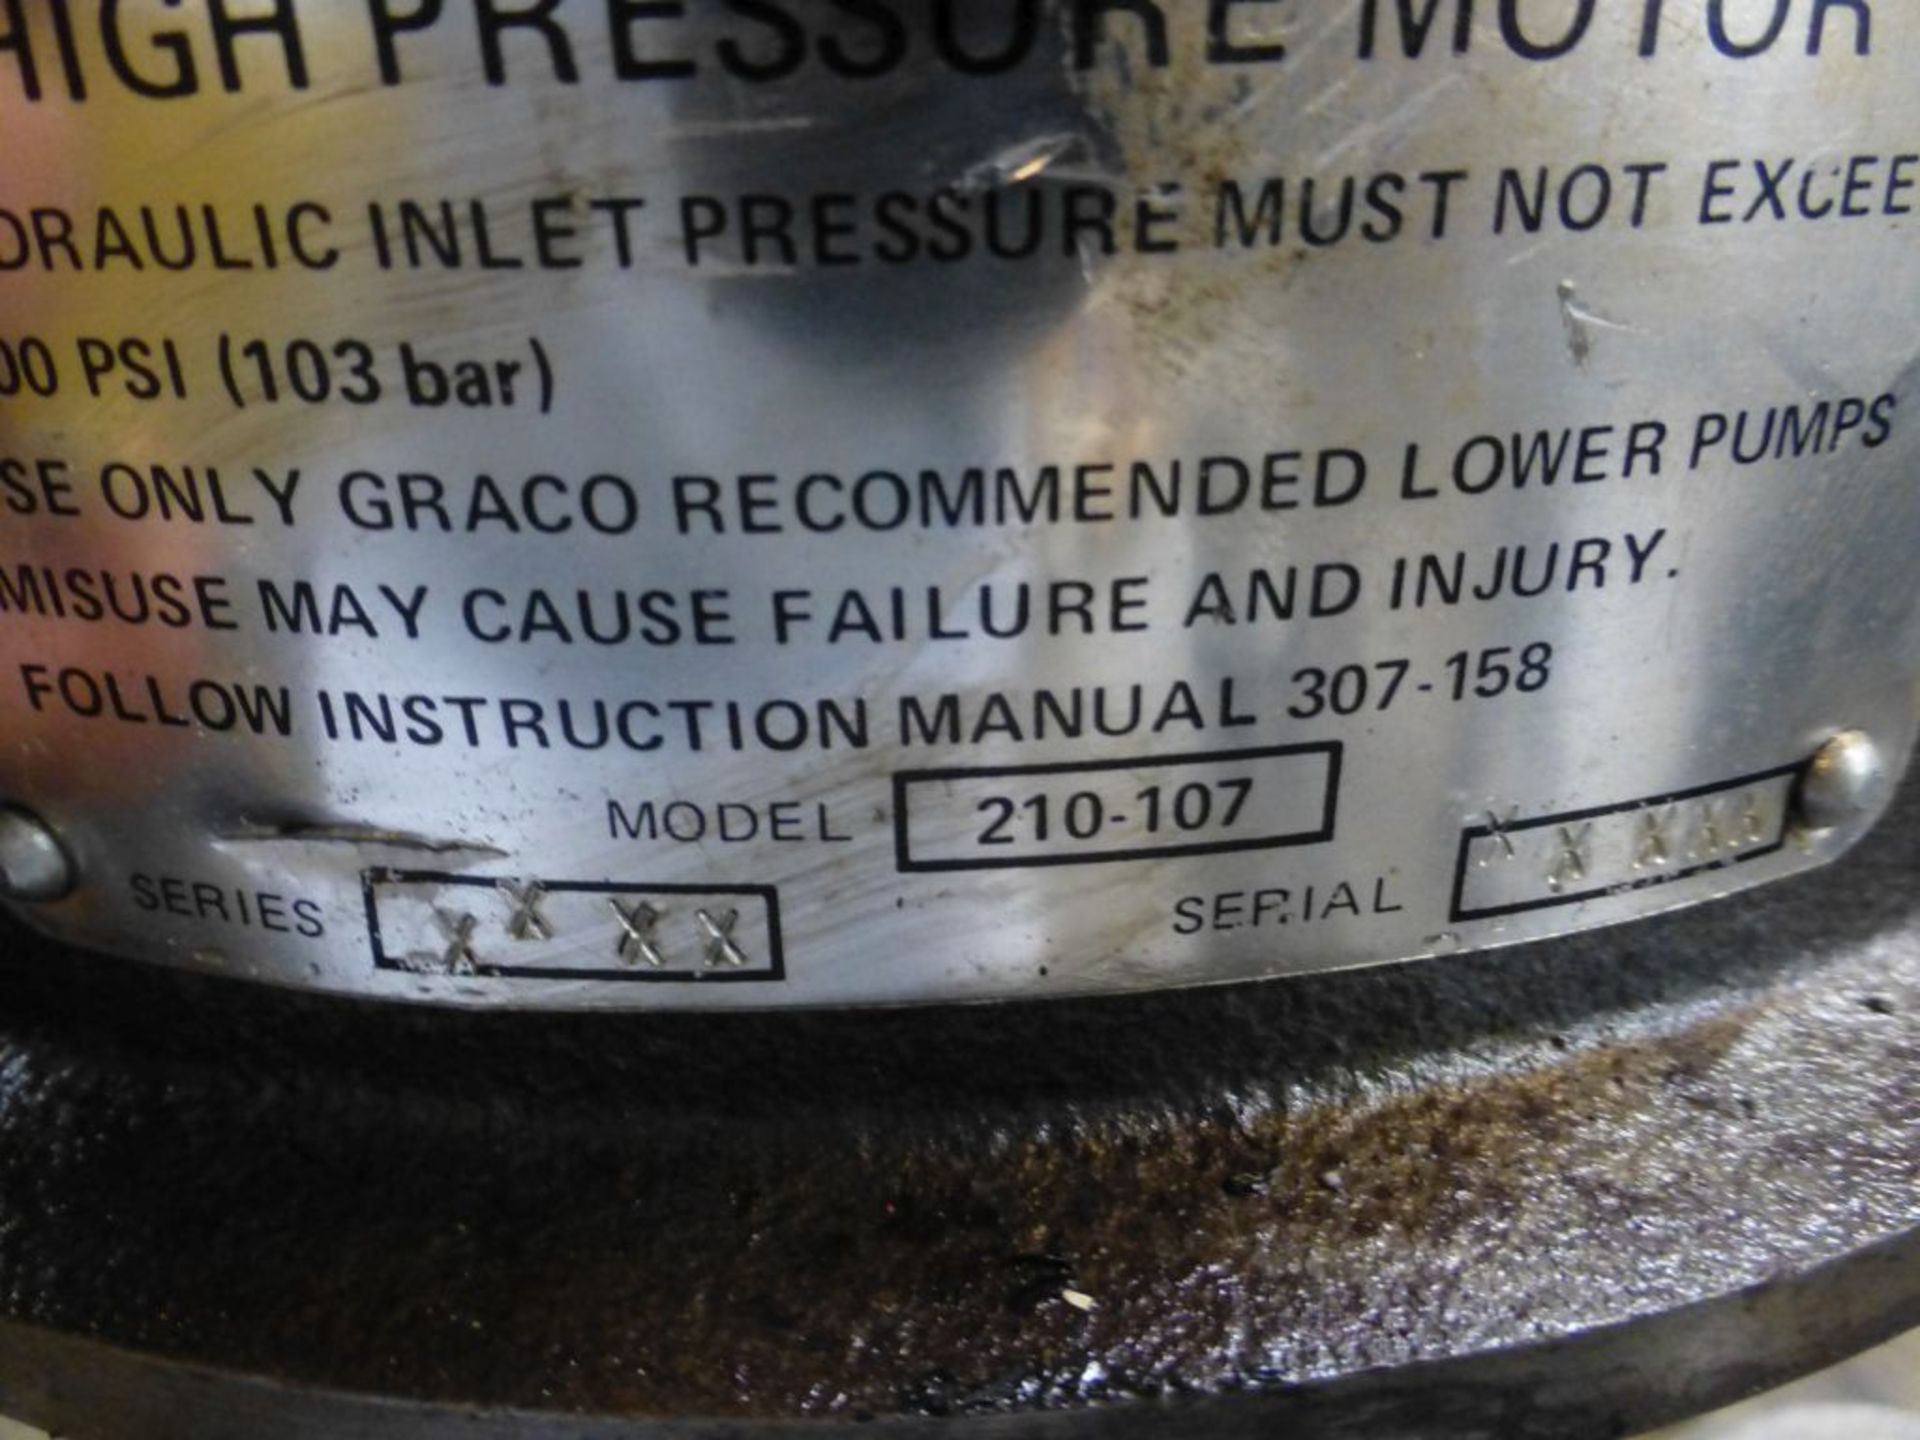 Graco Hydraulic Piston Pump|Model No 210-107 - Image 6 of 6